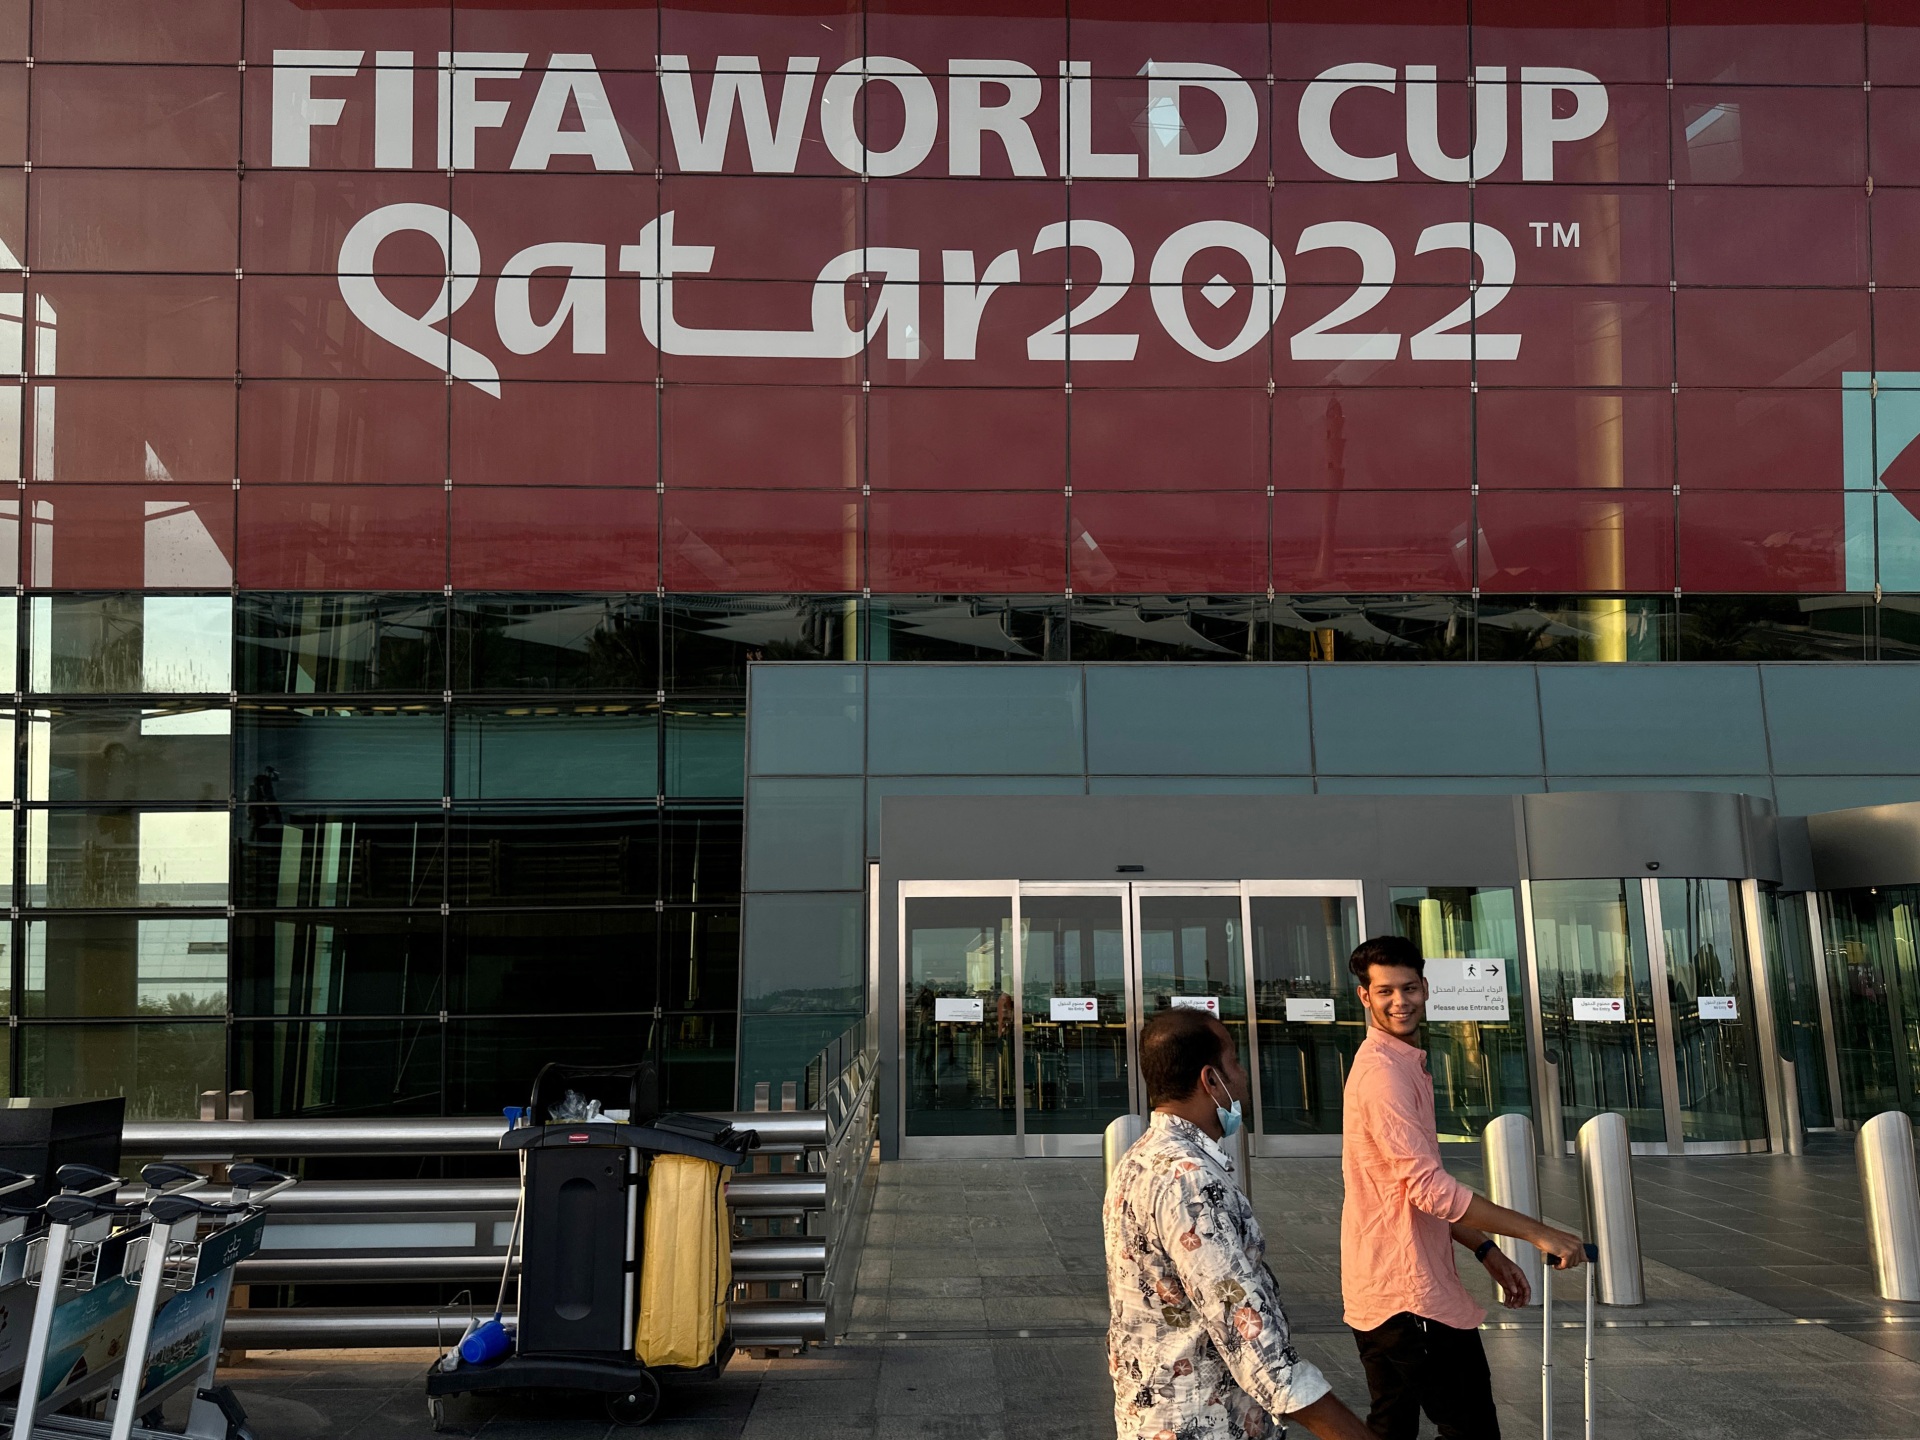 Qatar official slams ‘hypocrisy’ of World Cup criticism